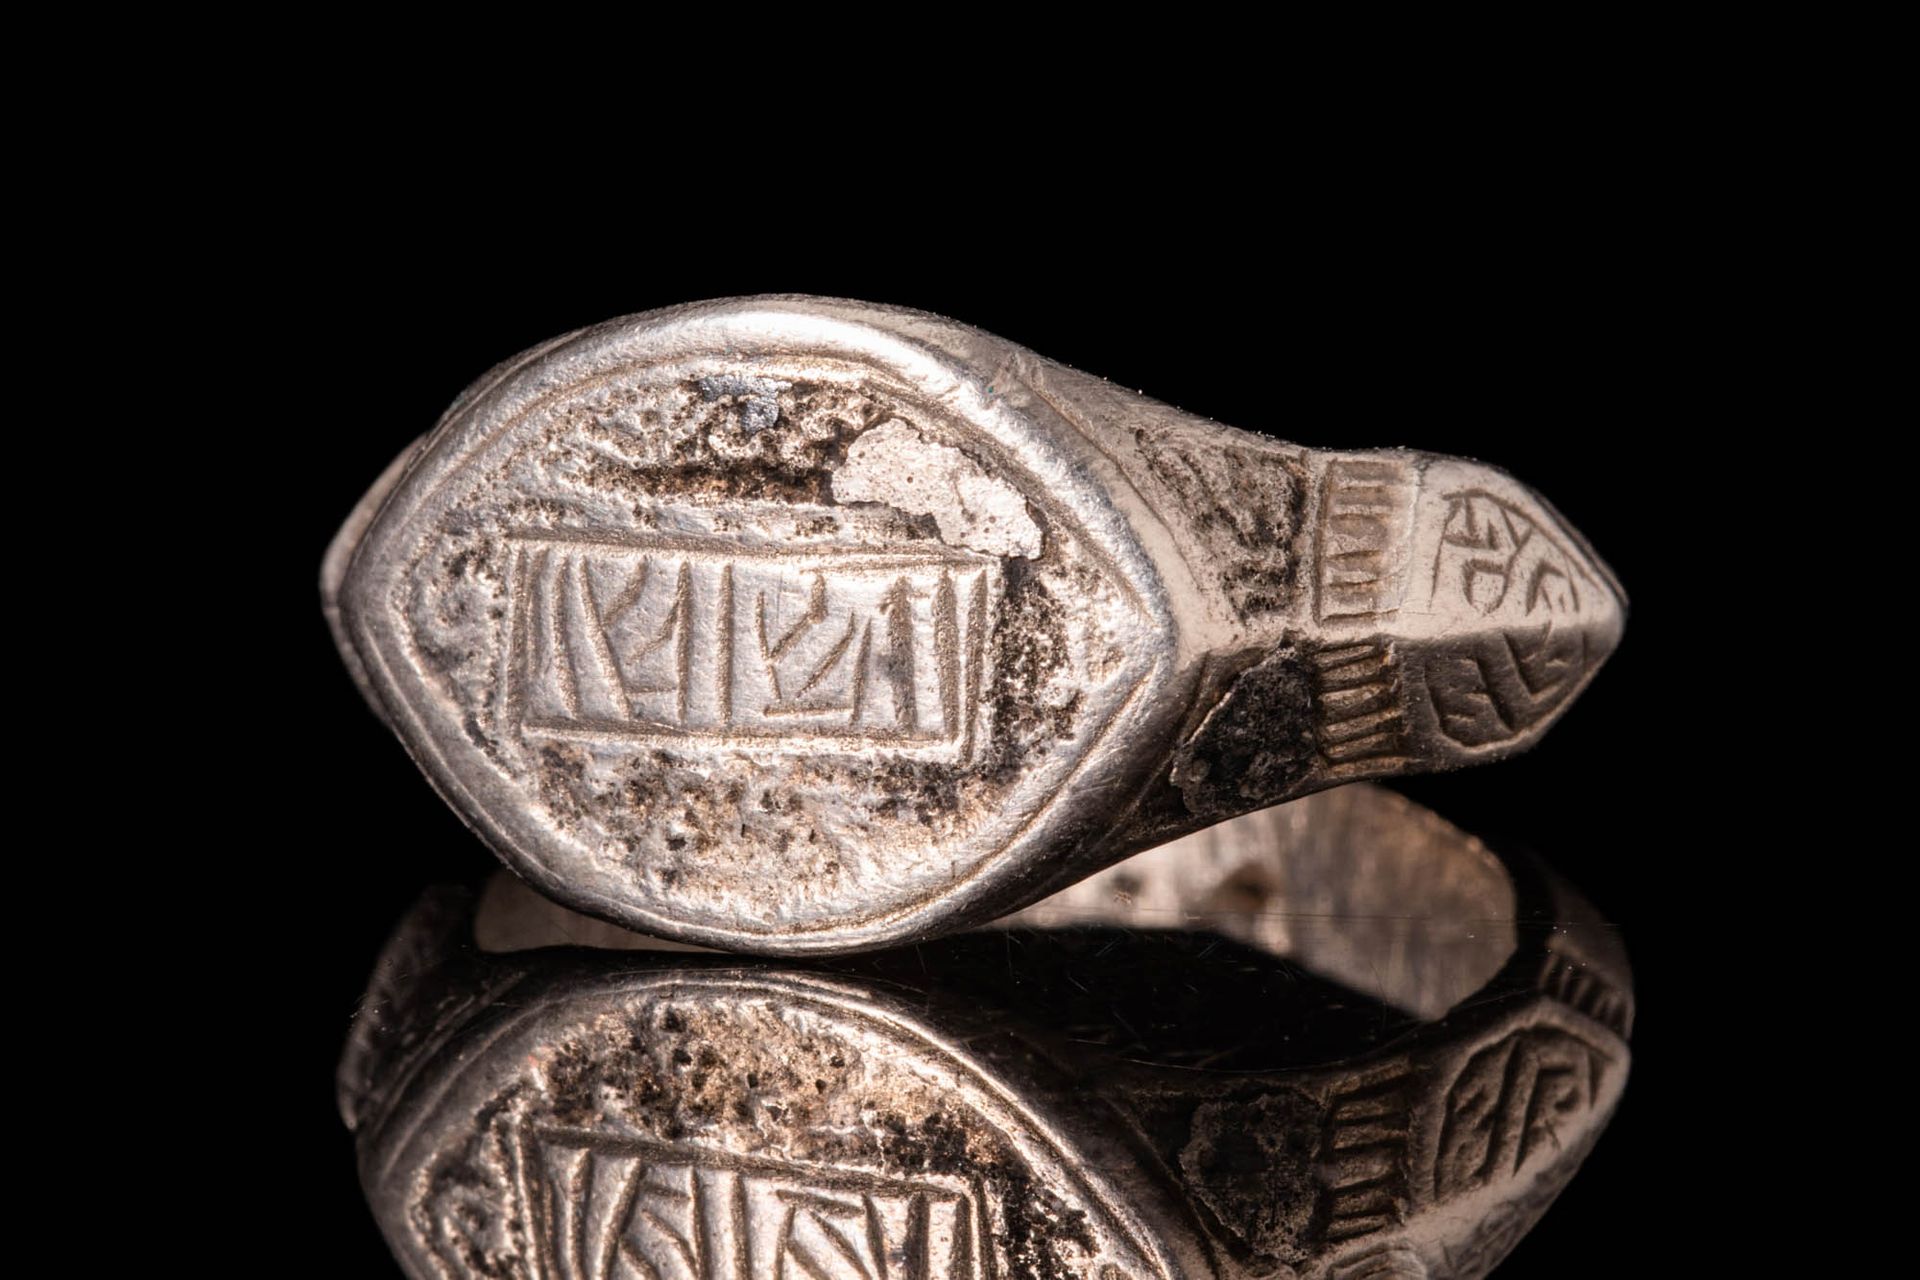 MEDIEVAL SELJUK SILVER FINGER RING WITH INSCRIPTION Ca. AD 900 - 1200.
An Mediev&hellip;